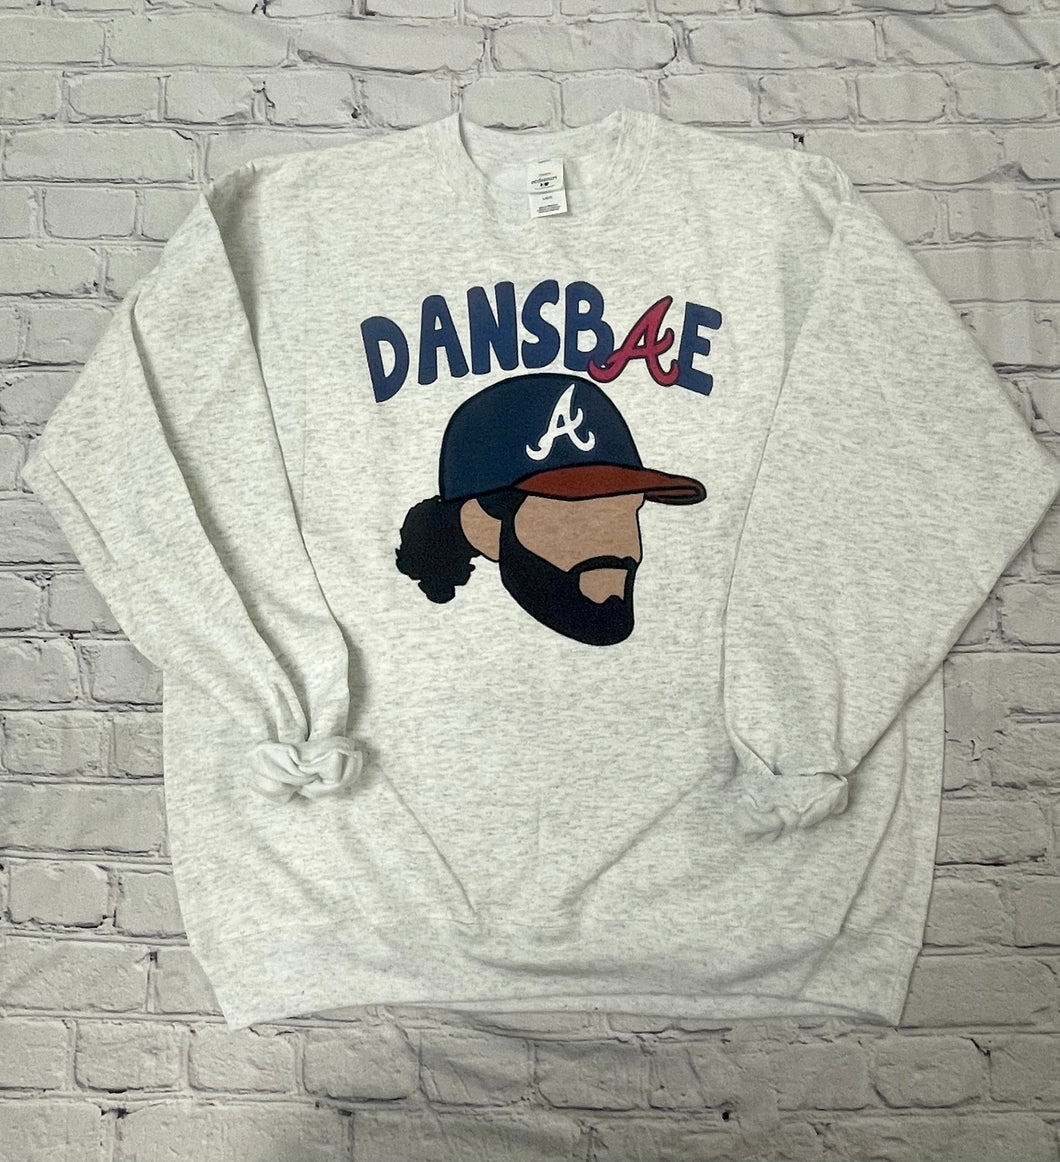 Dansbae T-Shirt or Sweatshirt